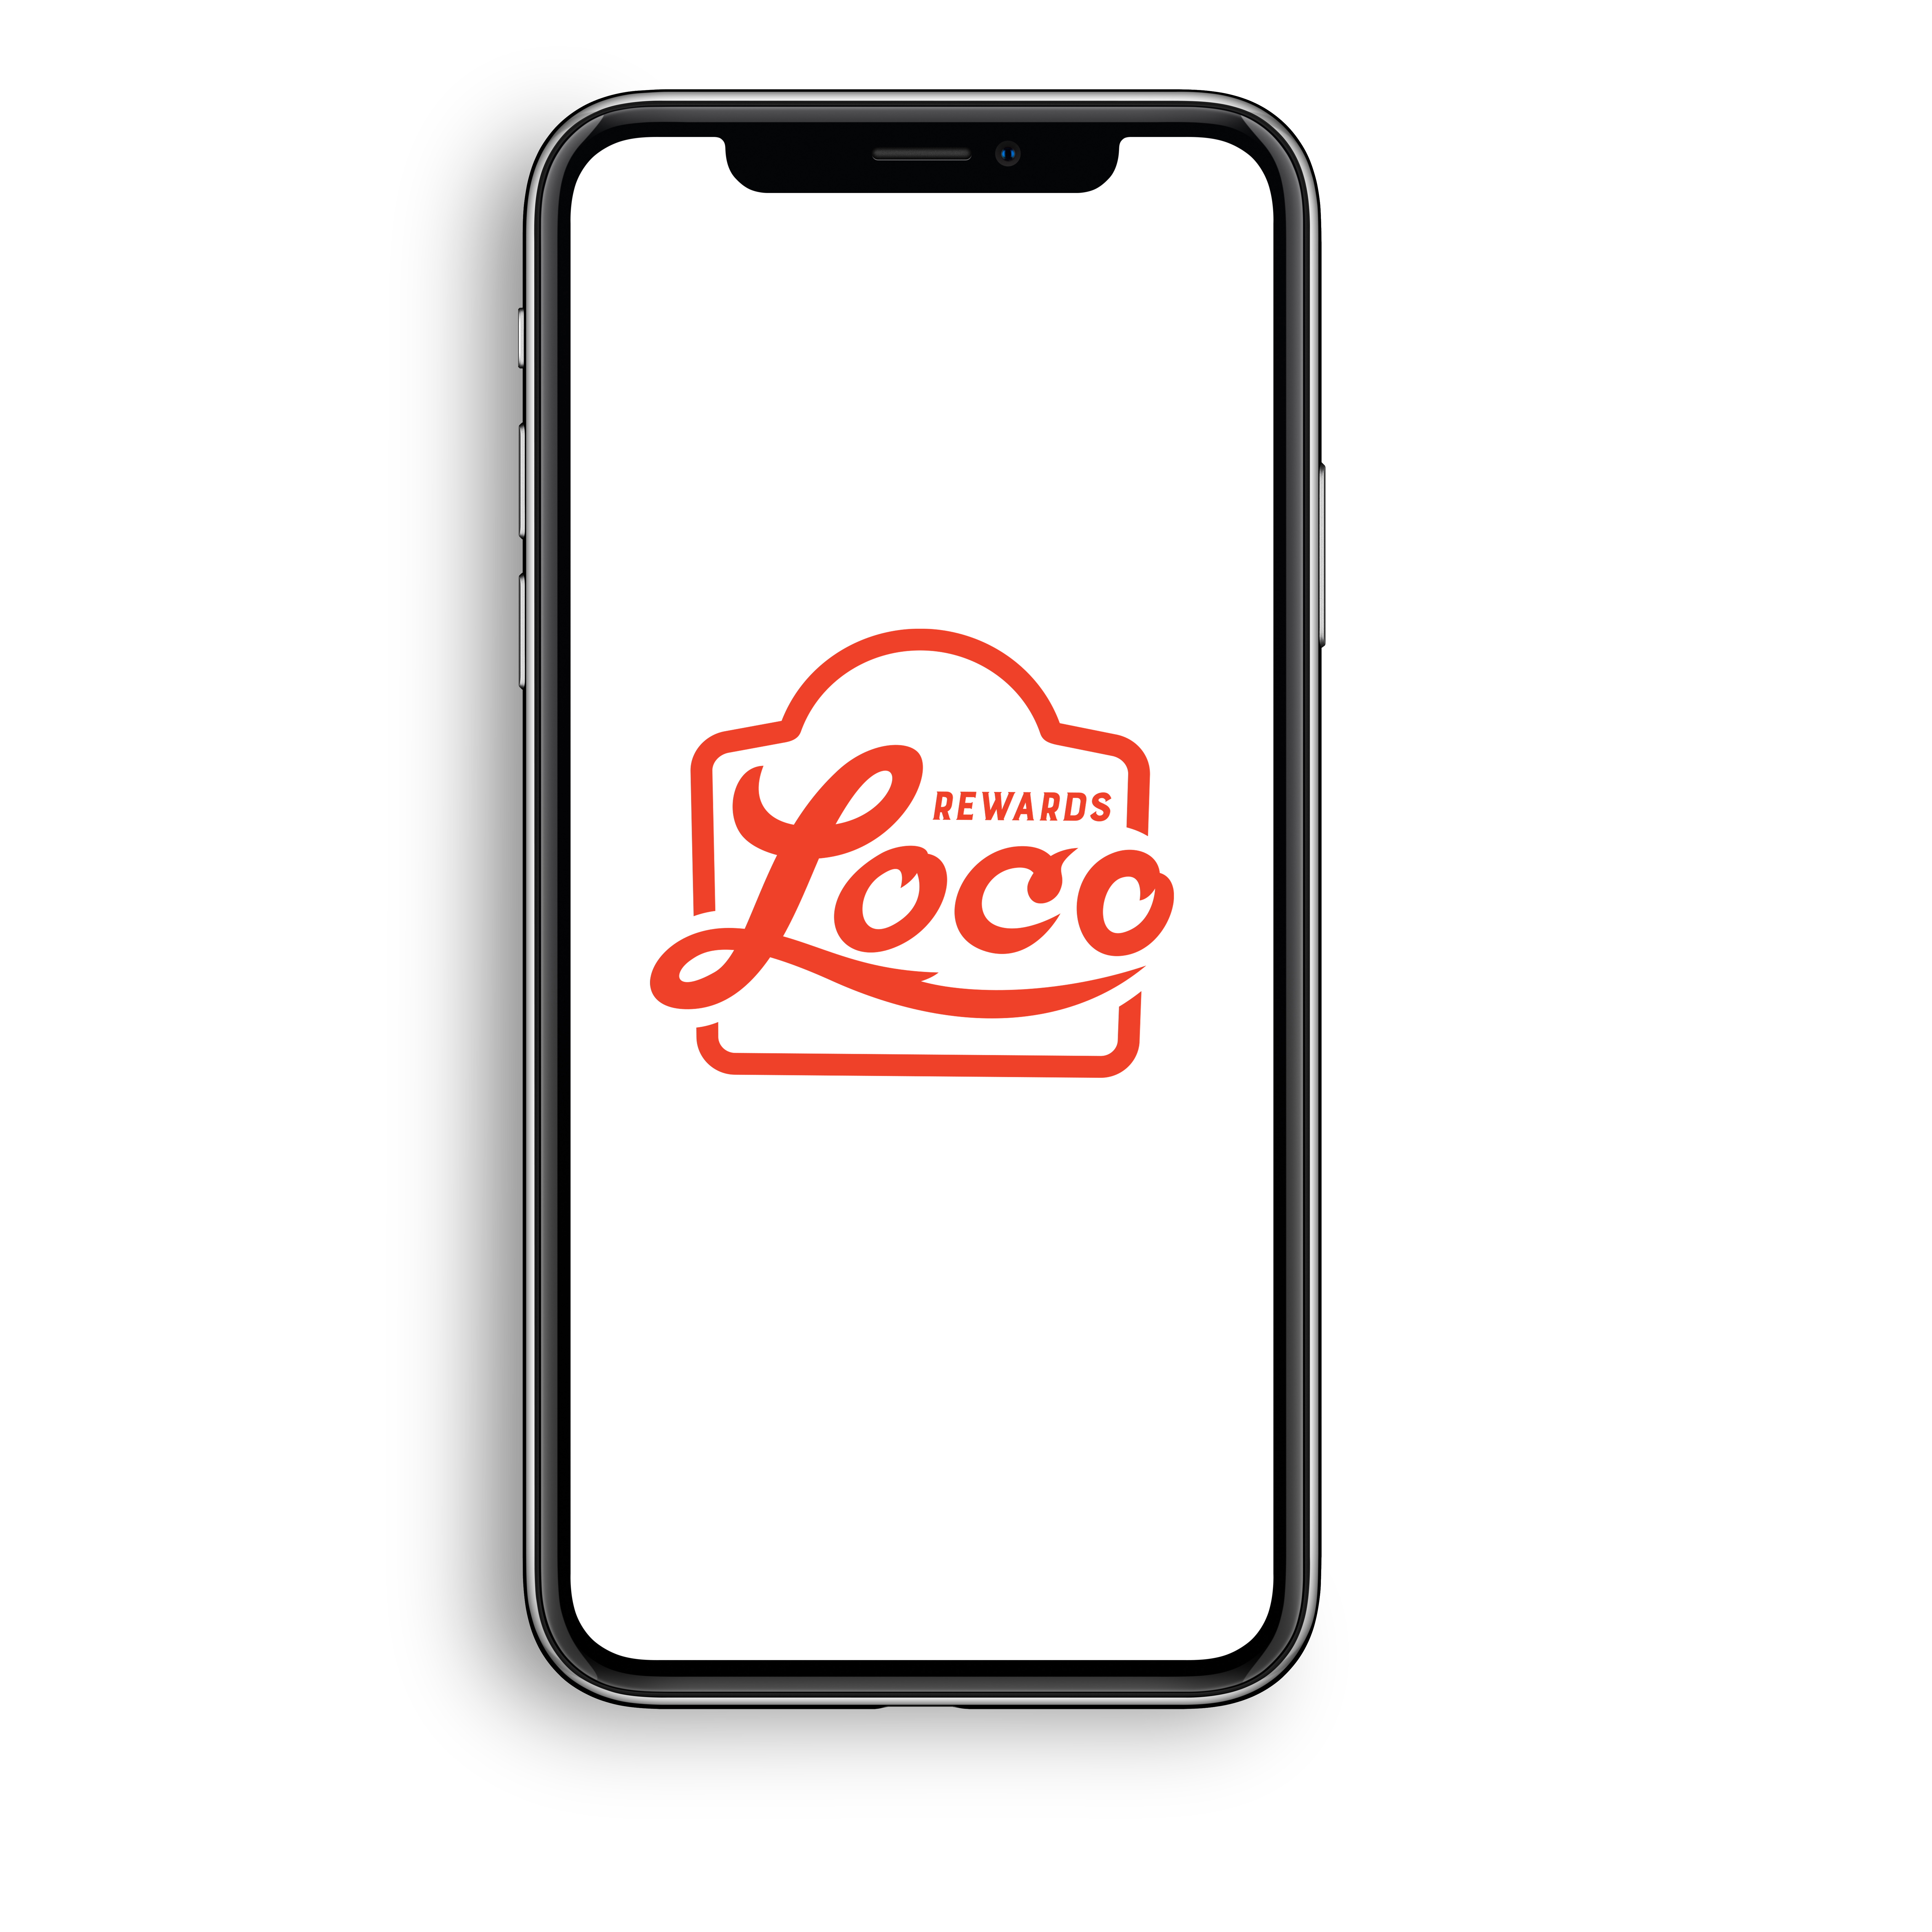 El Pollo Loco Selects Organic to Lead Digital Efforts